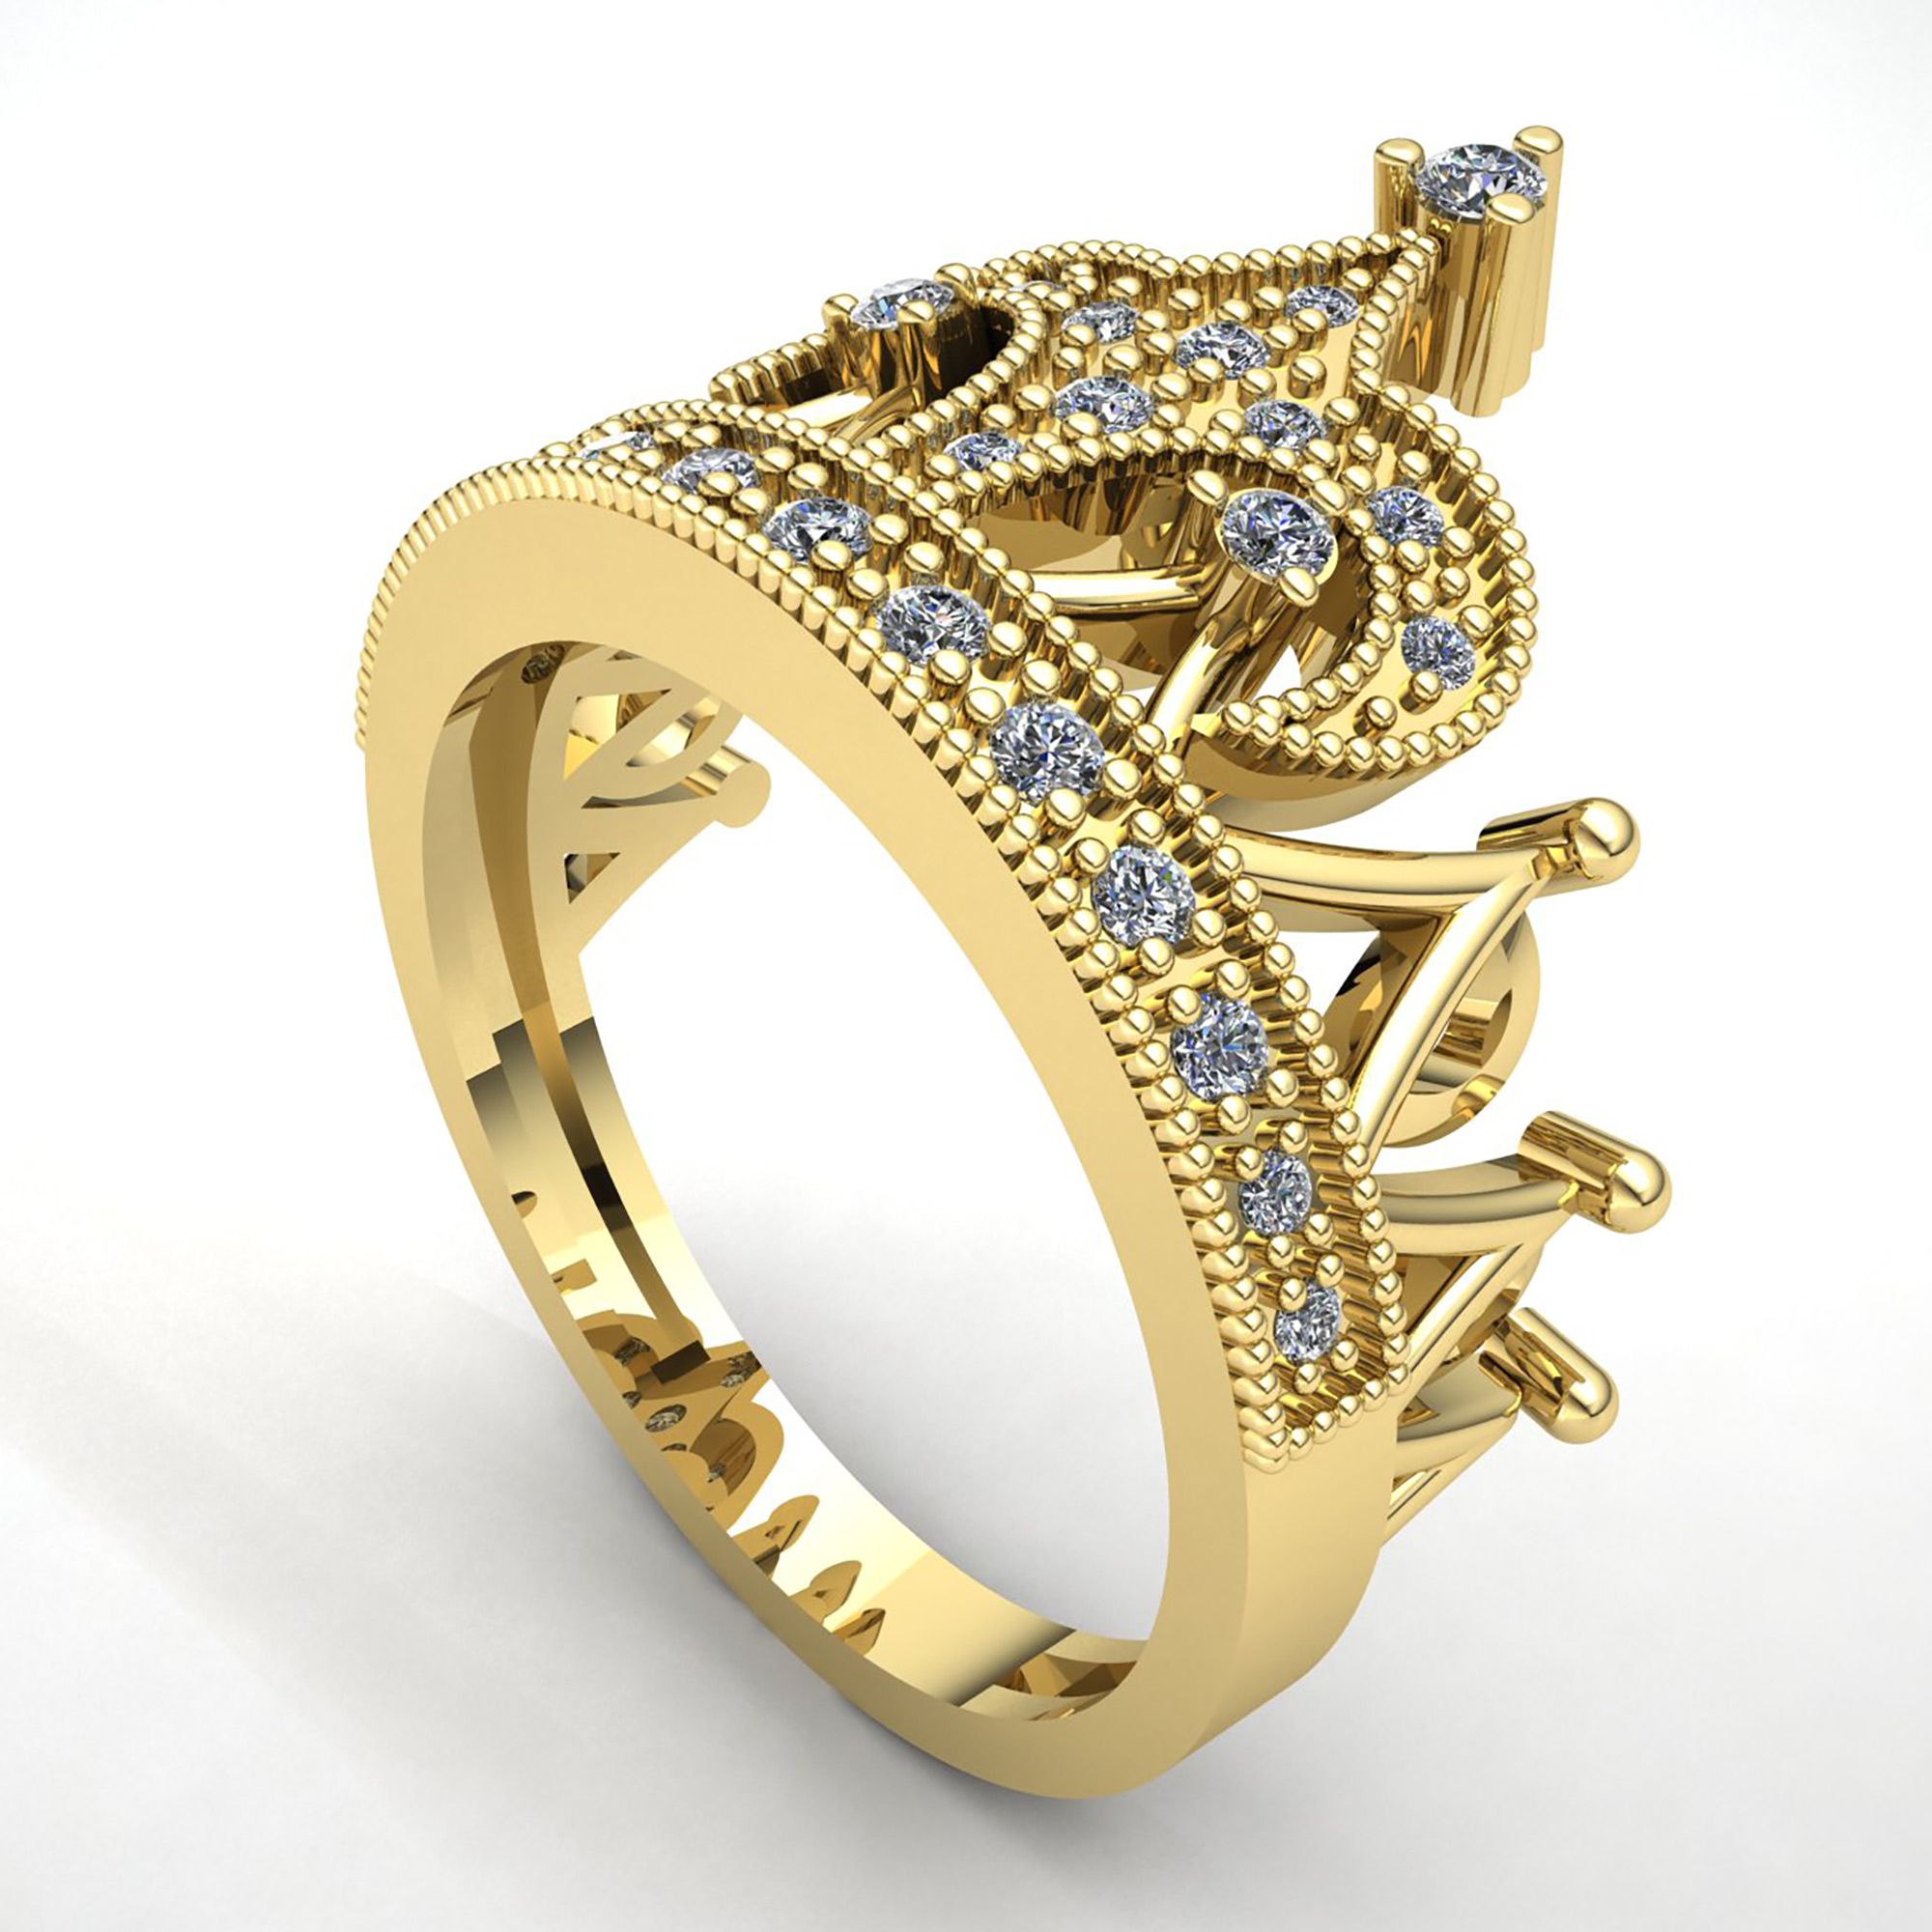 1carat Round Brilliant Cut Diamond Women's Crown Engagement Ring 14K